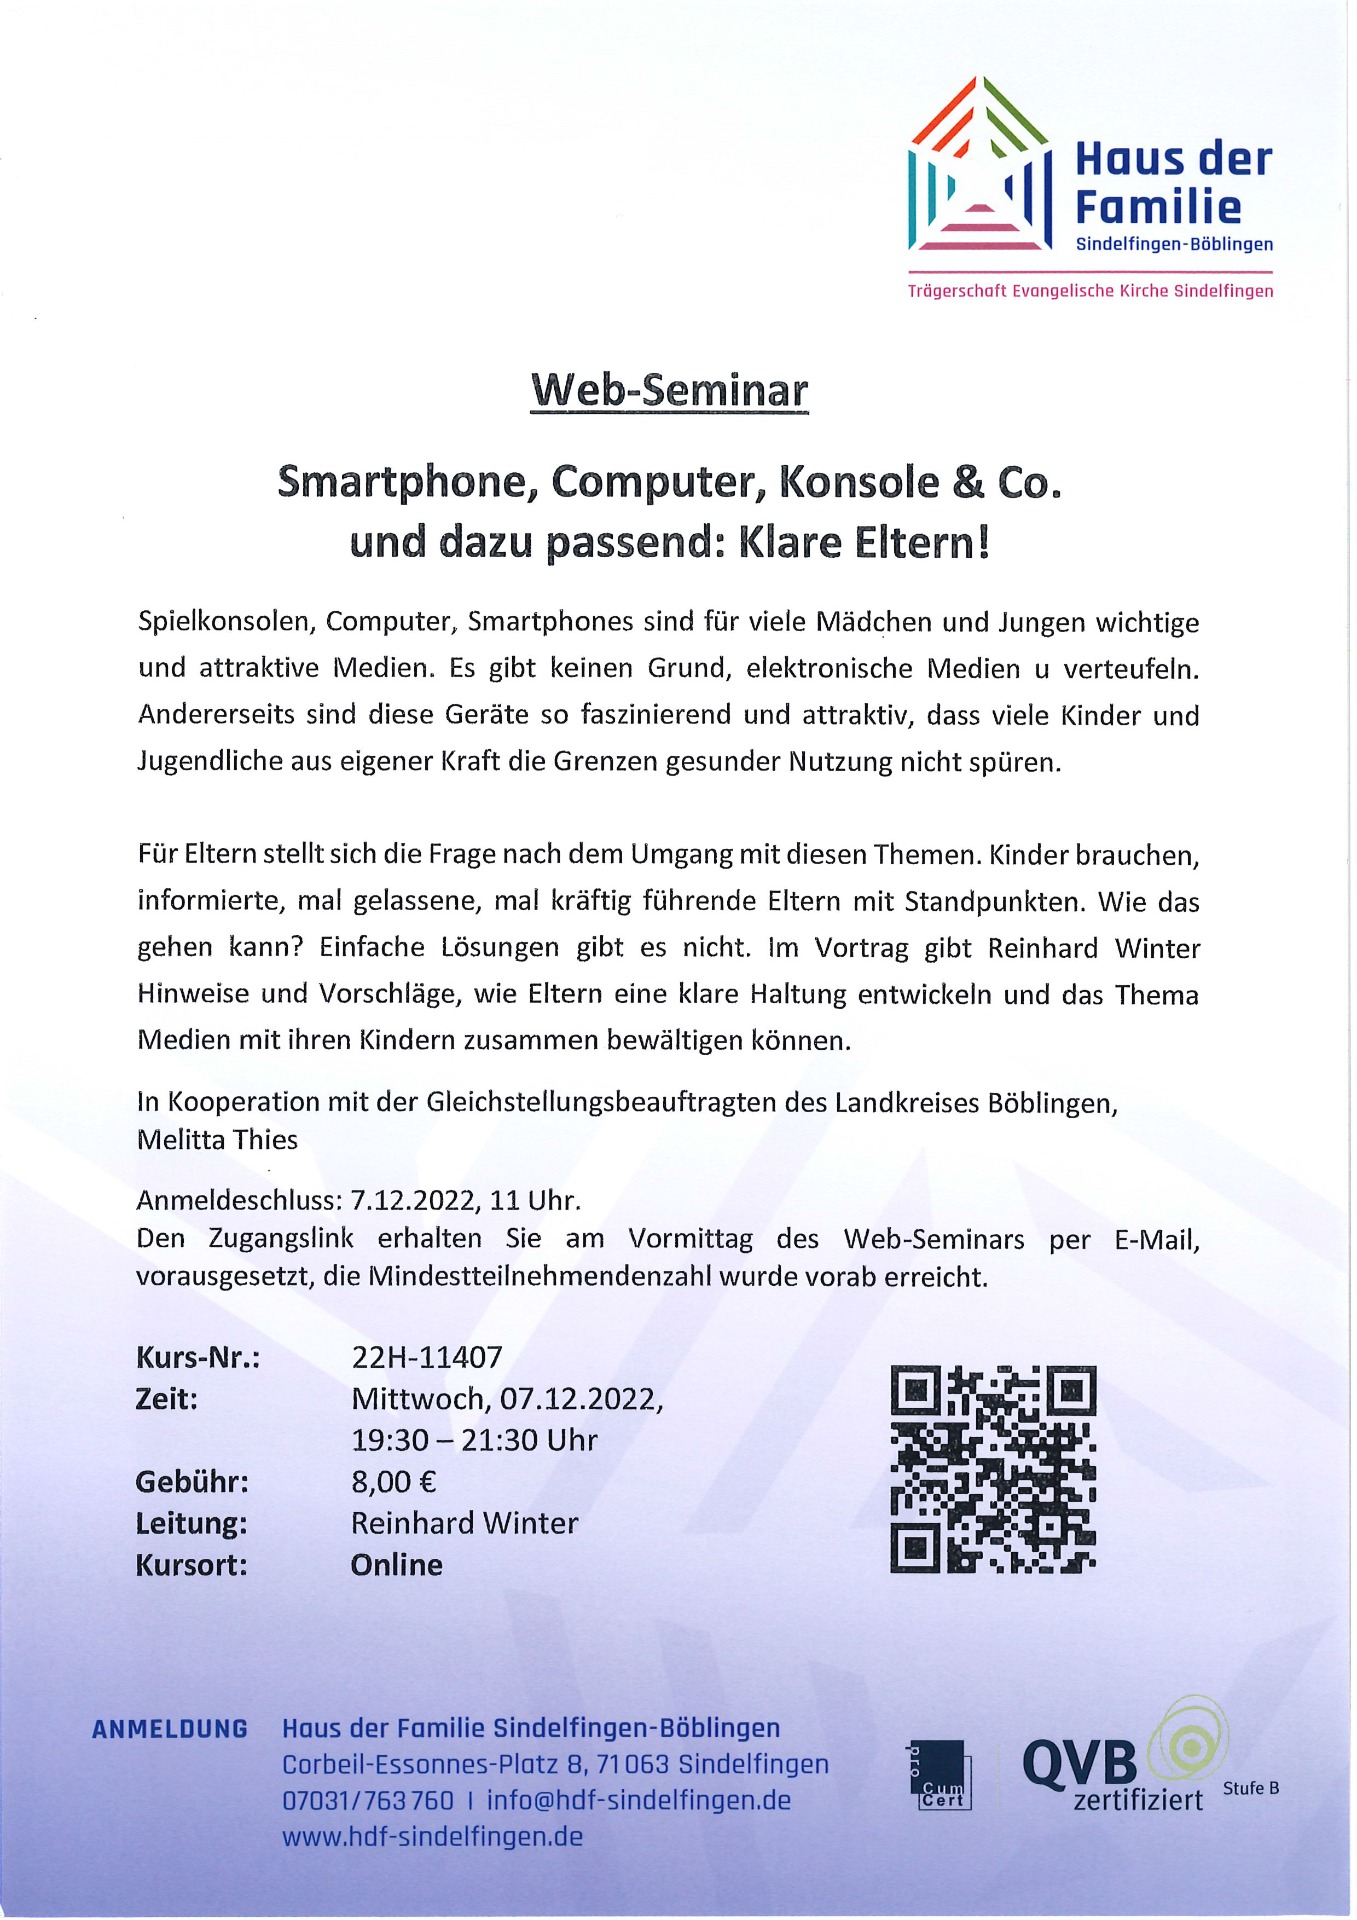 Web-Seminar: Smartphone, Computer, Konsole & Co. - Bild 1